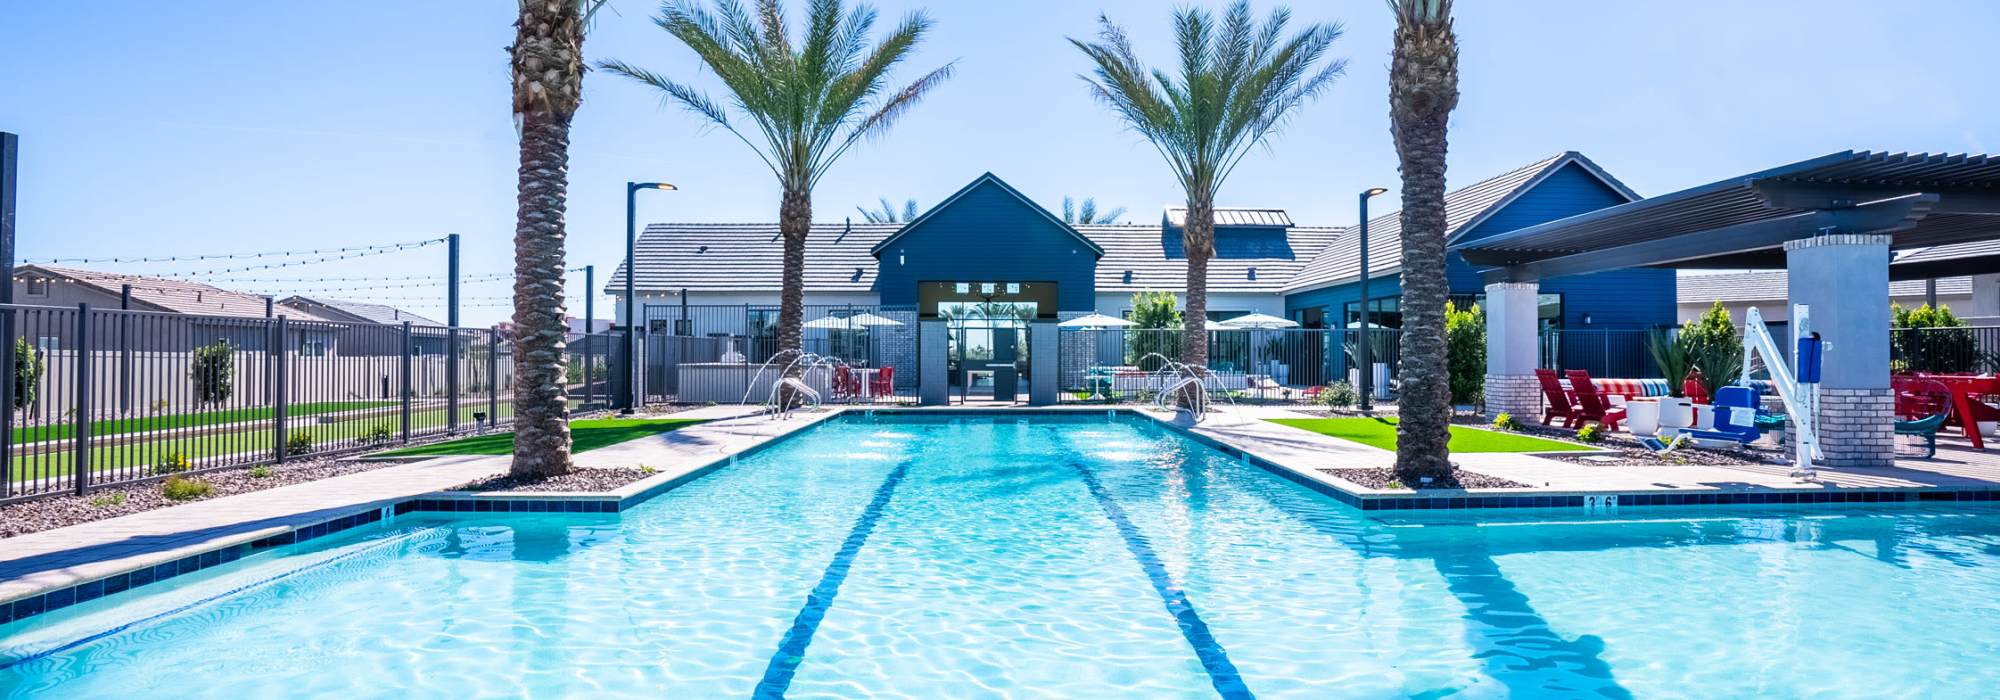 Resort style pool at FirstStreet Ballpark Village in Goodyear, Arizona